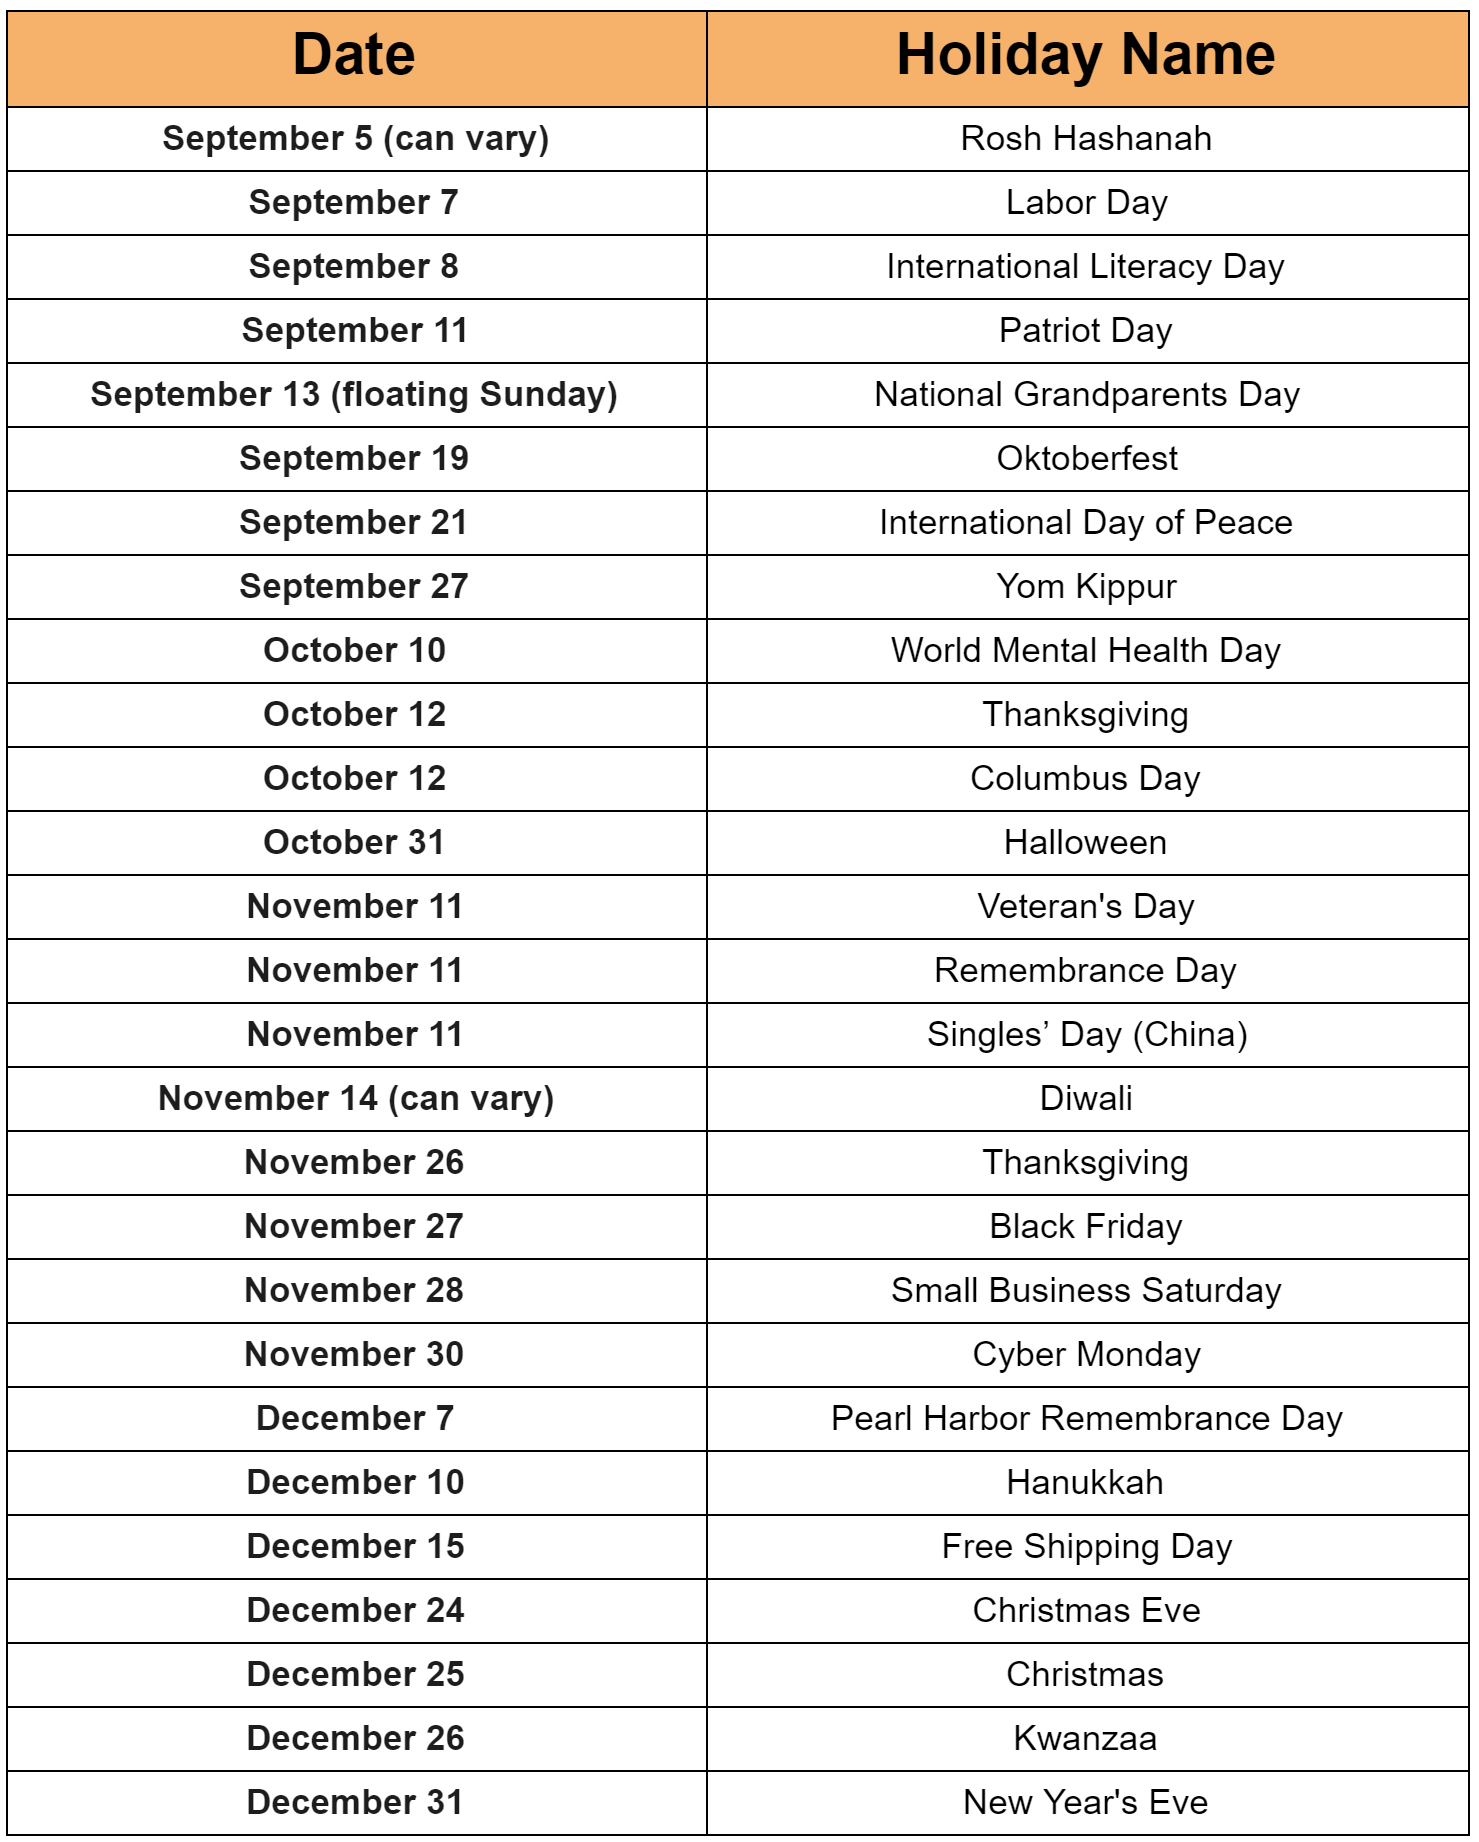 eCommerce Holiday Calendar: September to December 2020